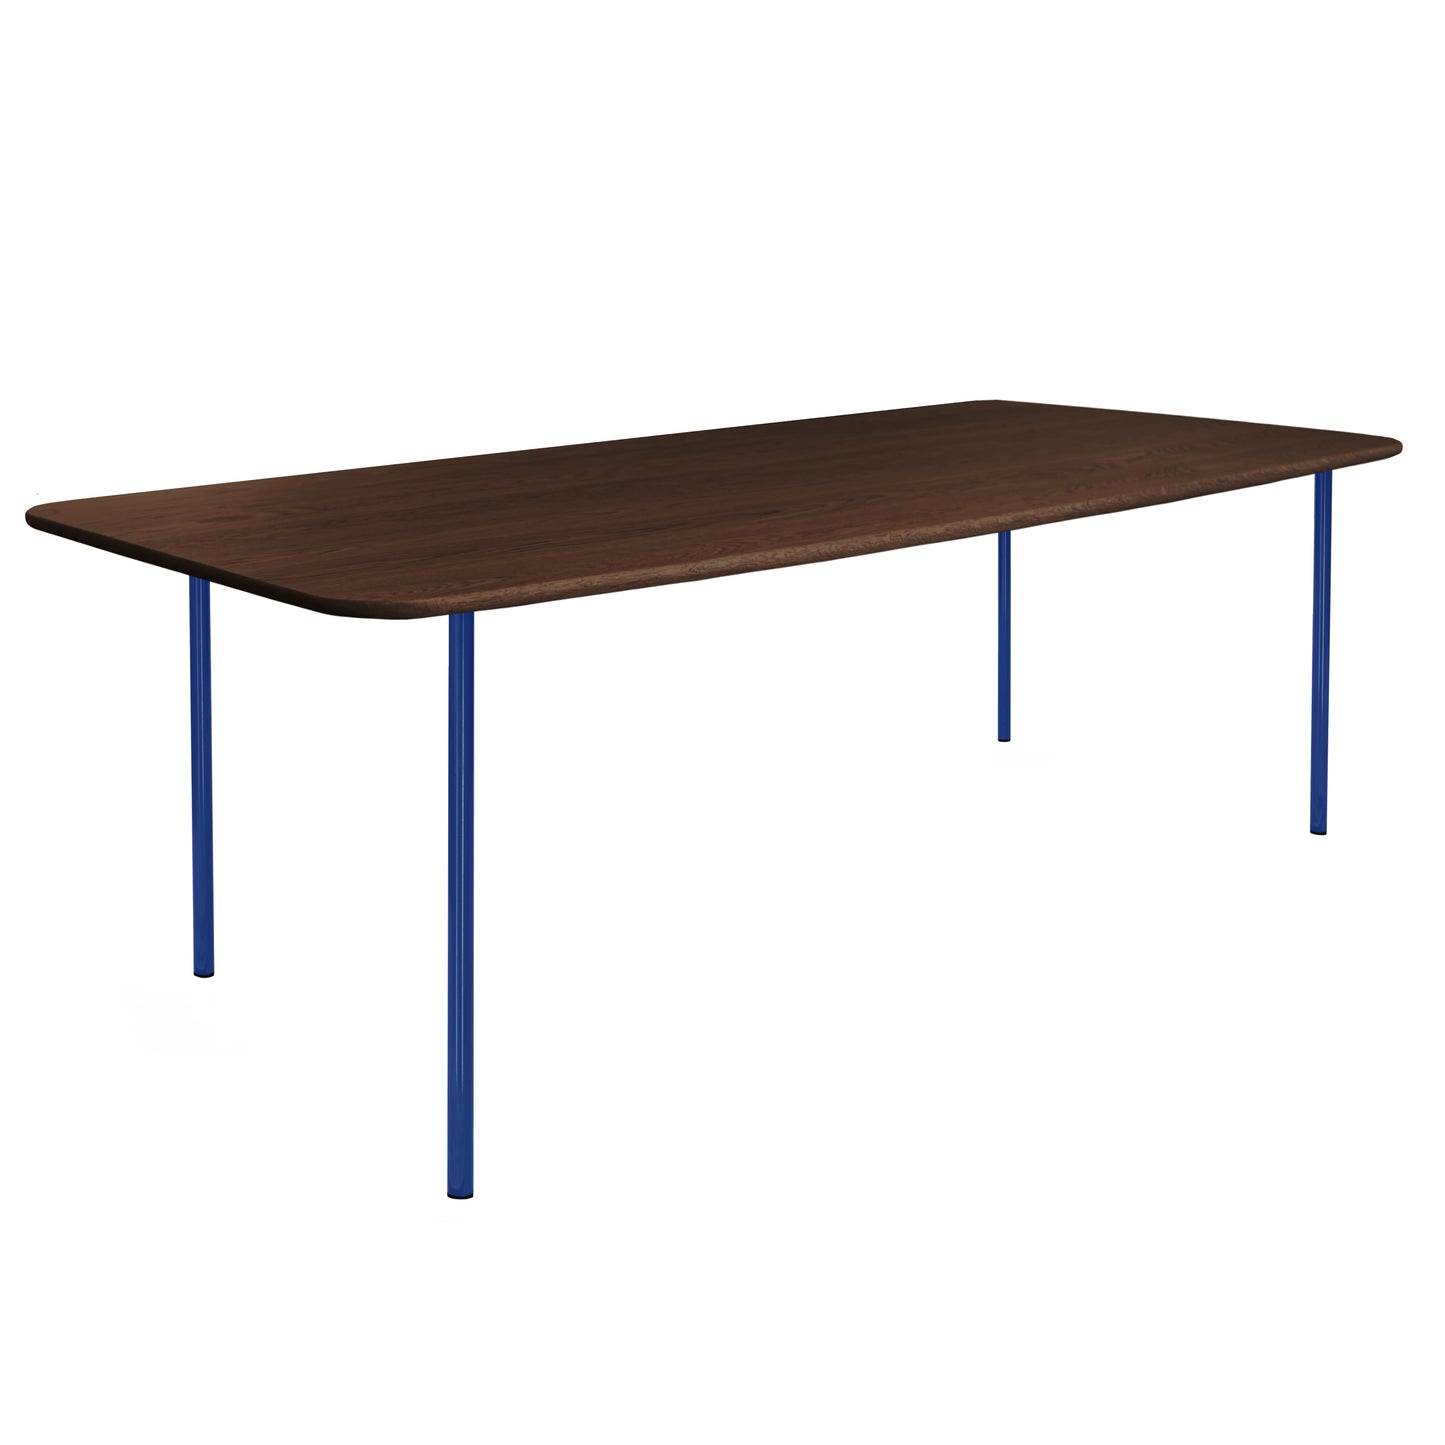 HelloTable Steelo eettafel rechthoek 180x100 cm bol eiken dark stained ultramarine blue